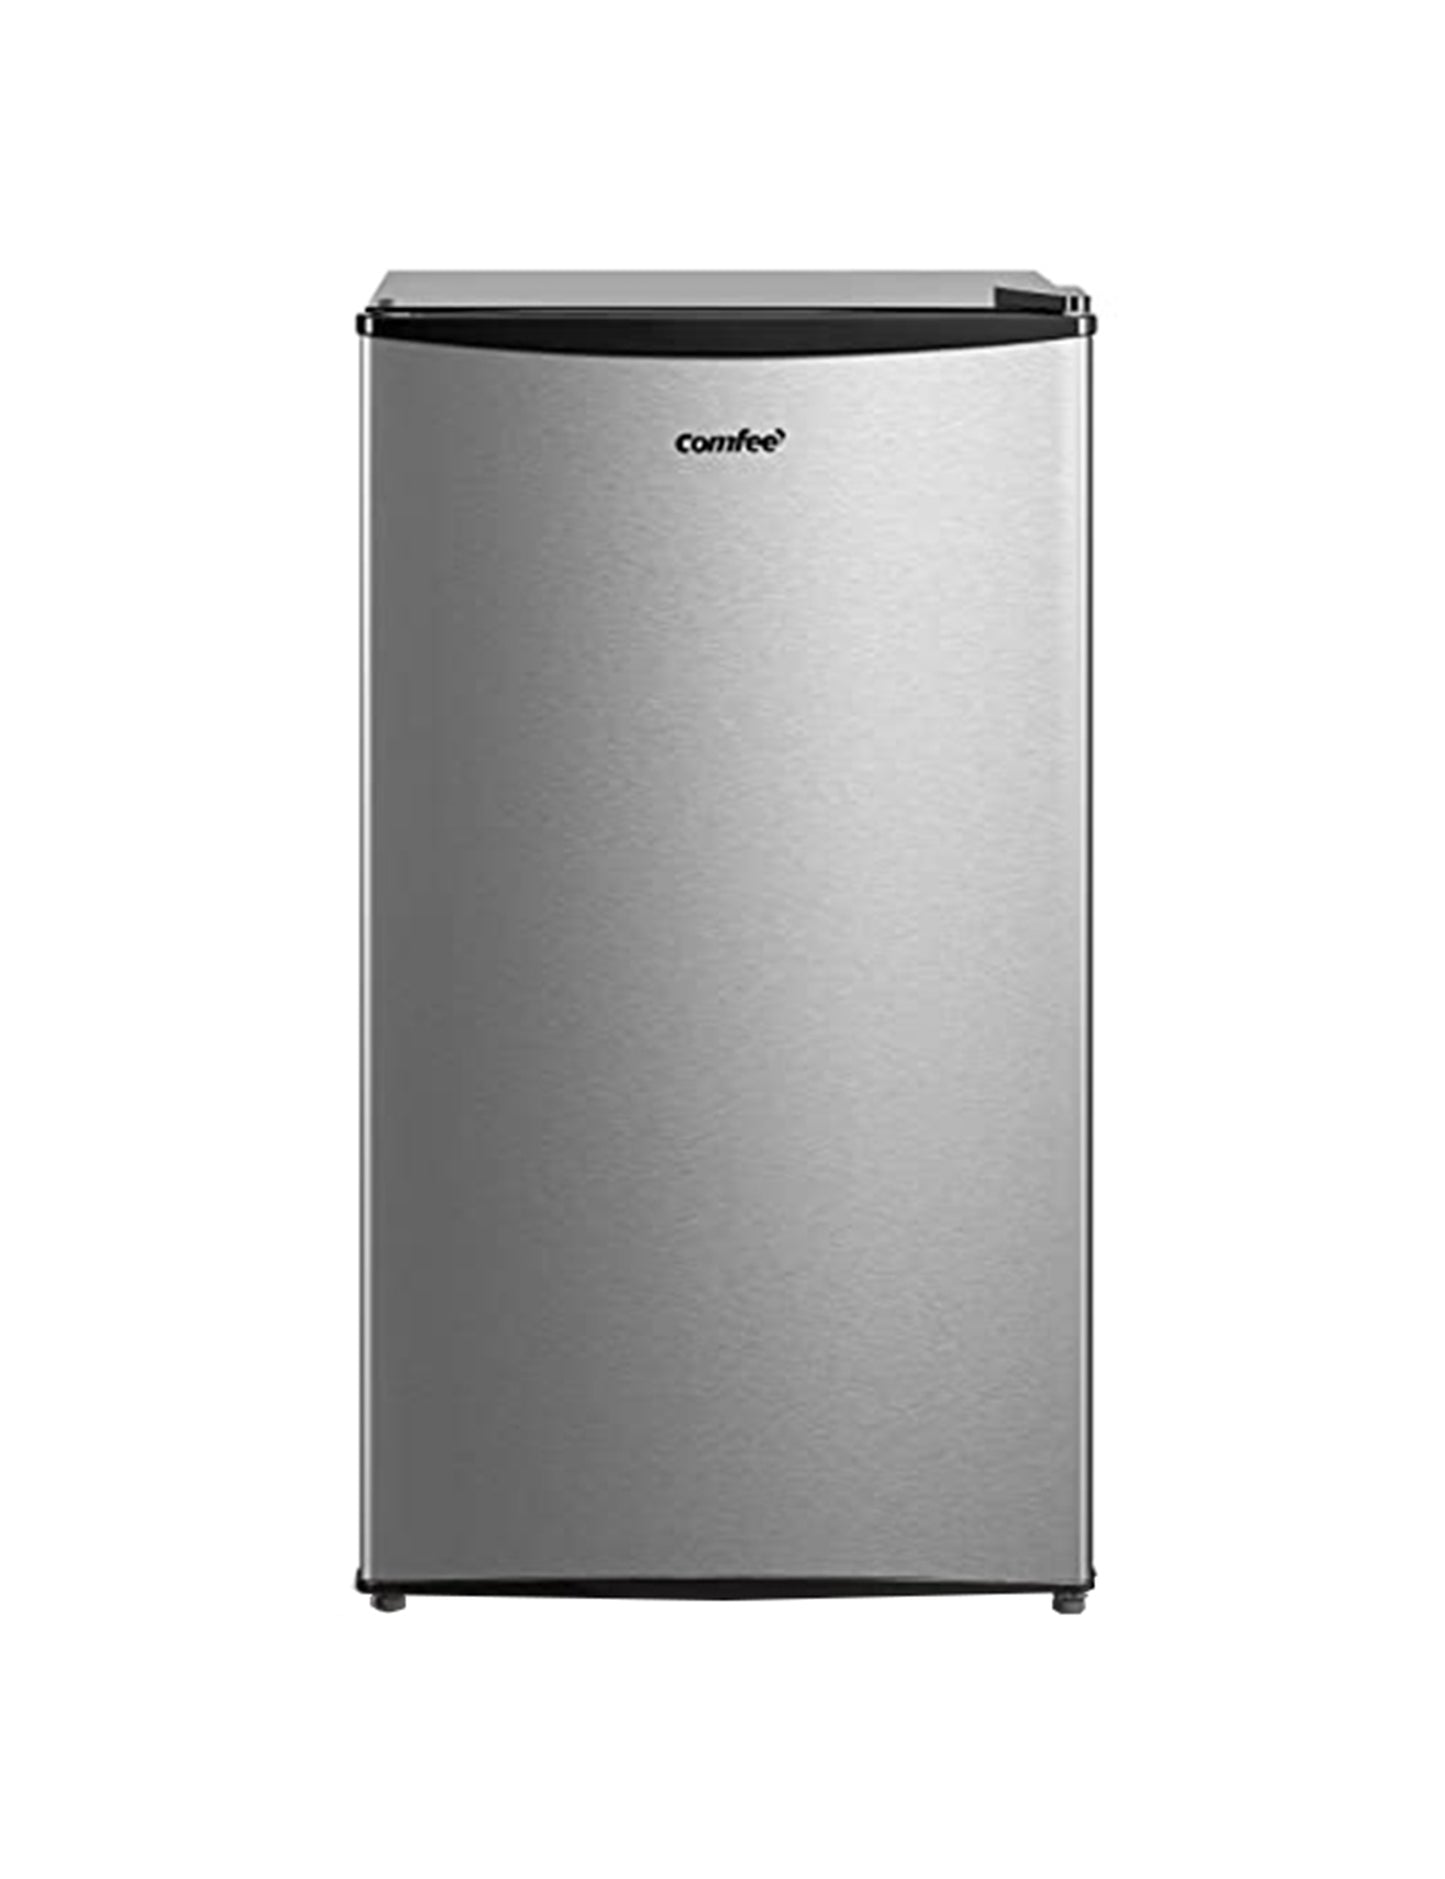 compact comfee refrigerator